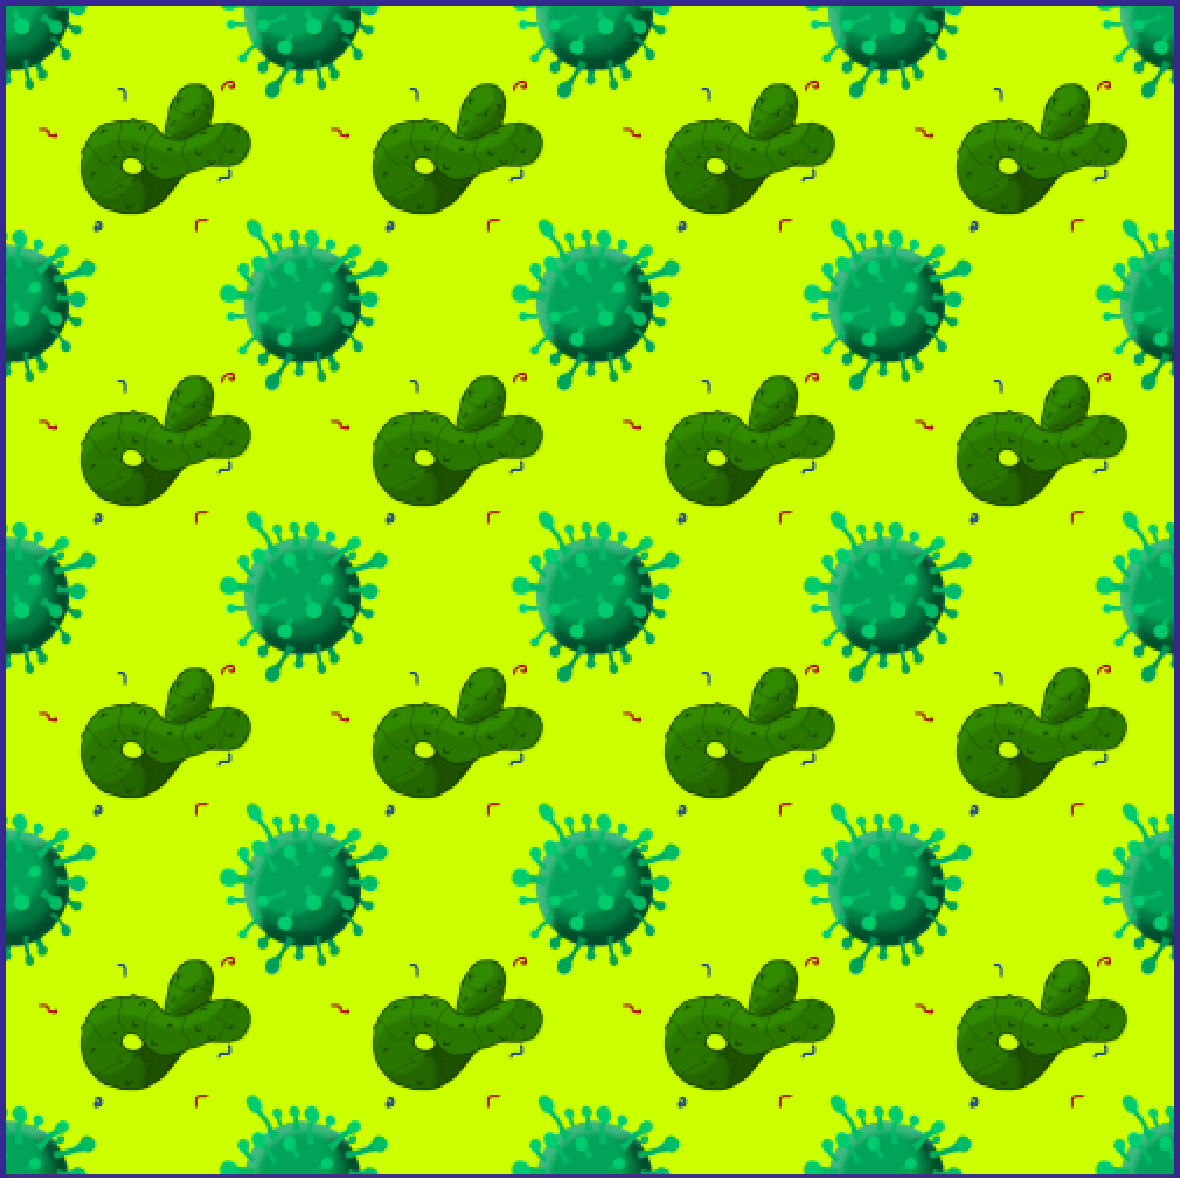 virus viruses virology ebola hiv biohasard